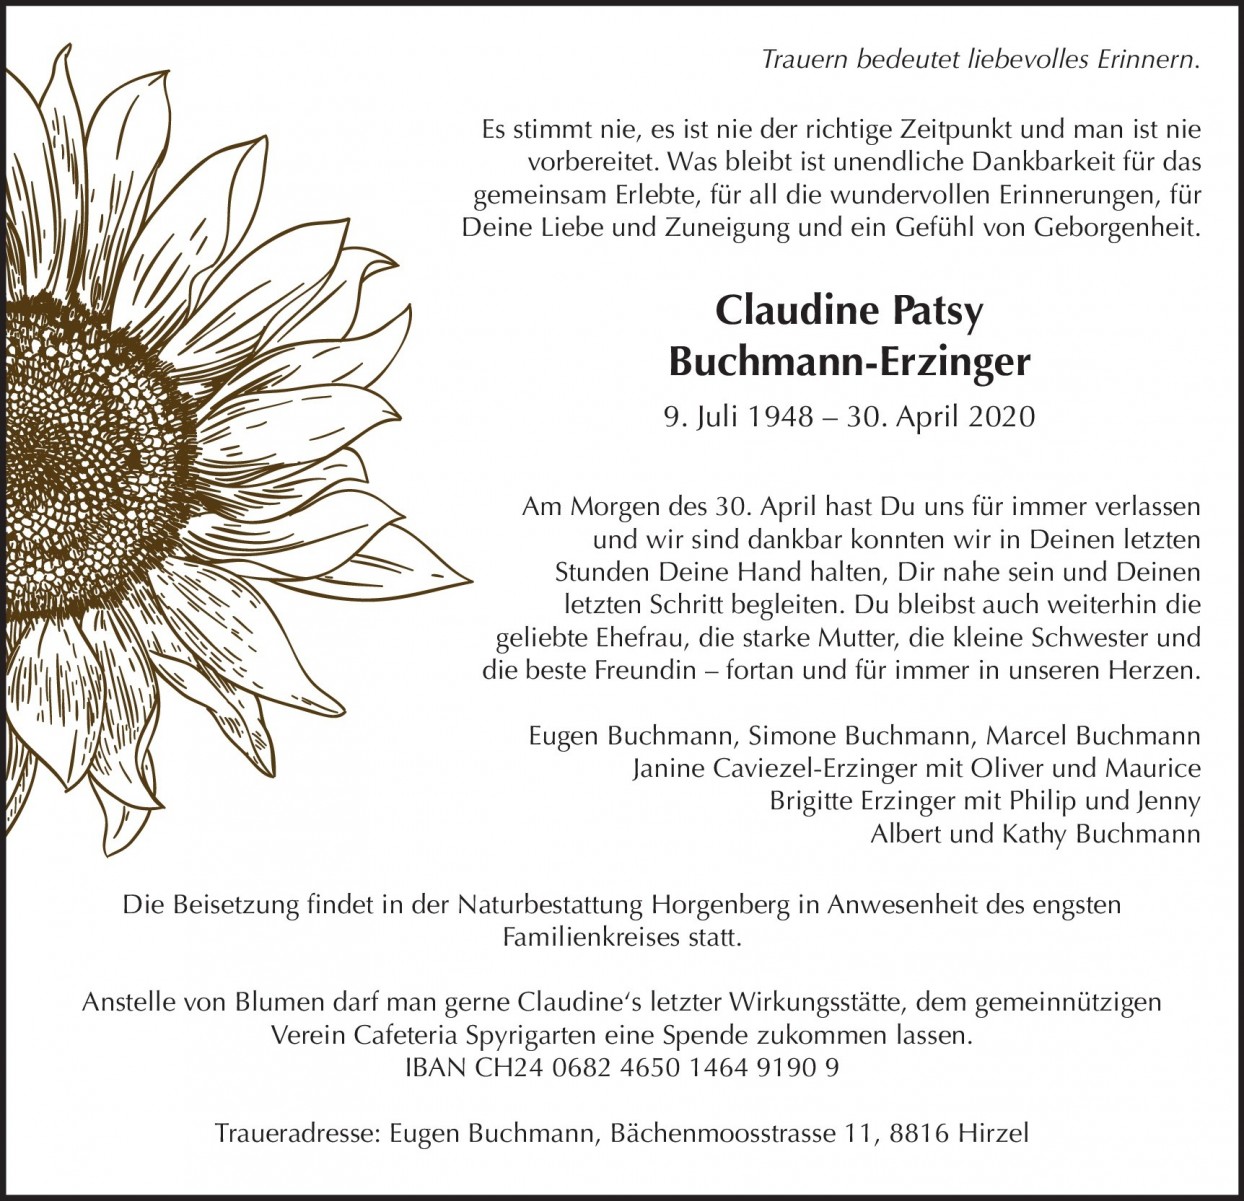 Claudine Patsy Buchmann-Erzinger